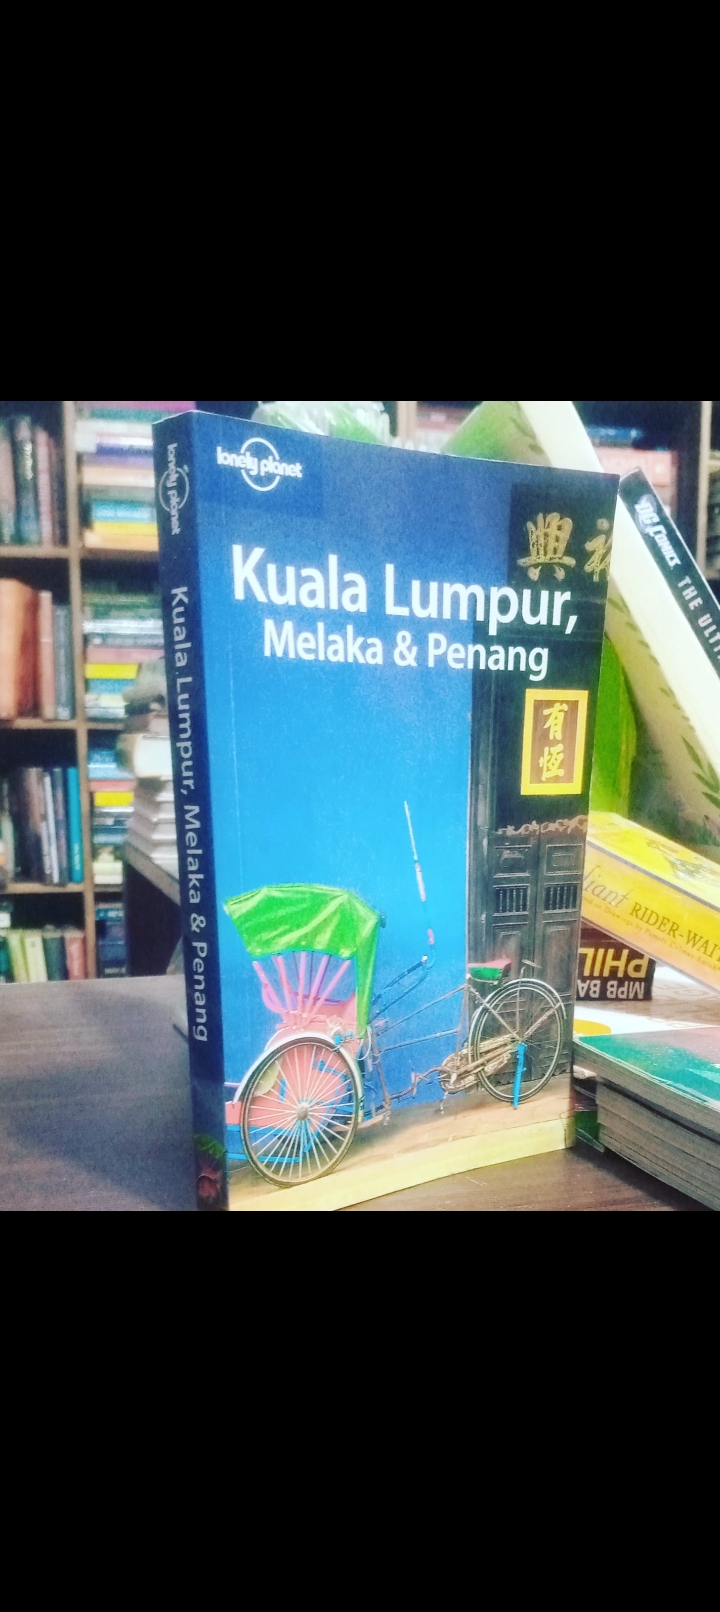 kuala lumpur, melaka & penang lonely planet travel guide original paperback